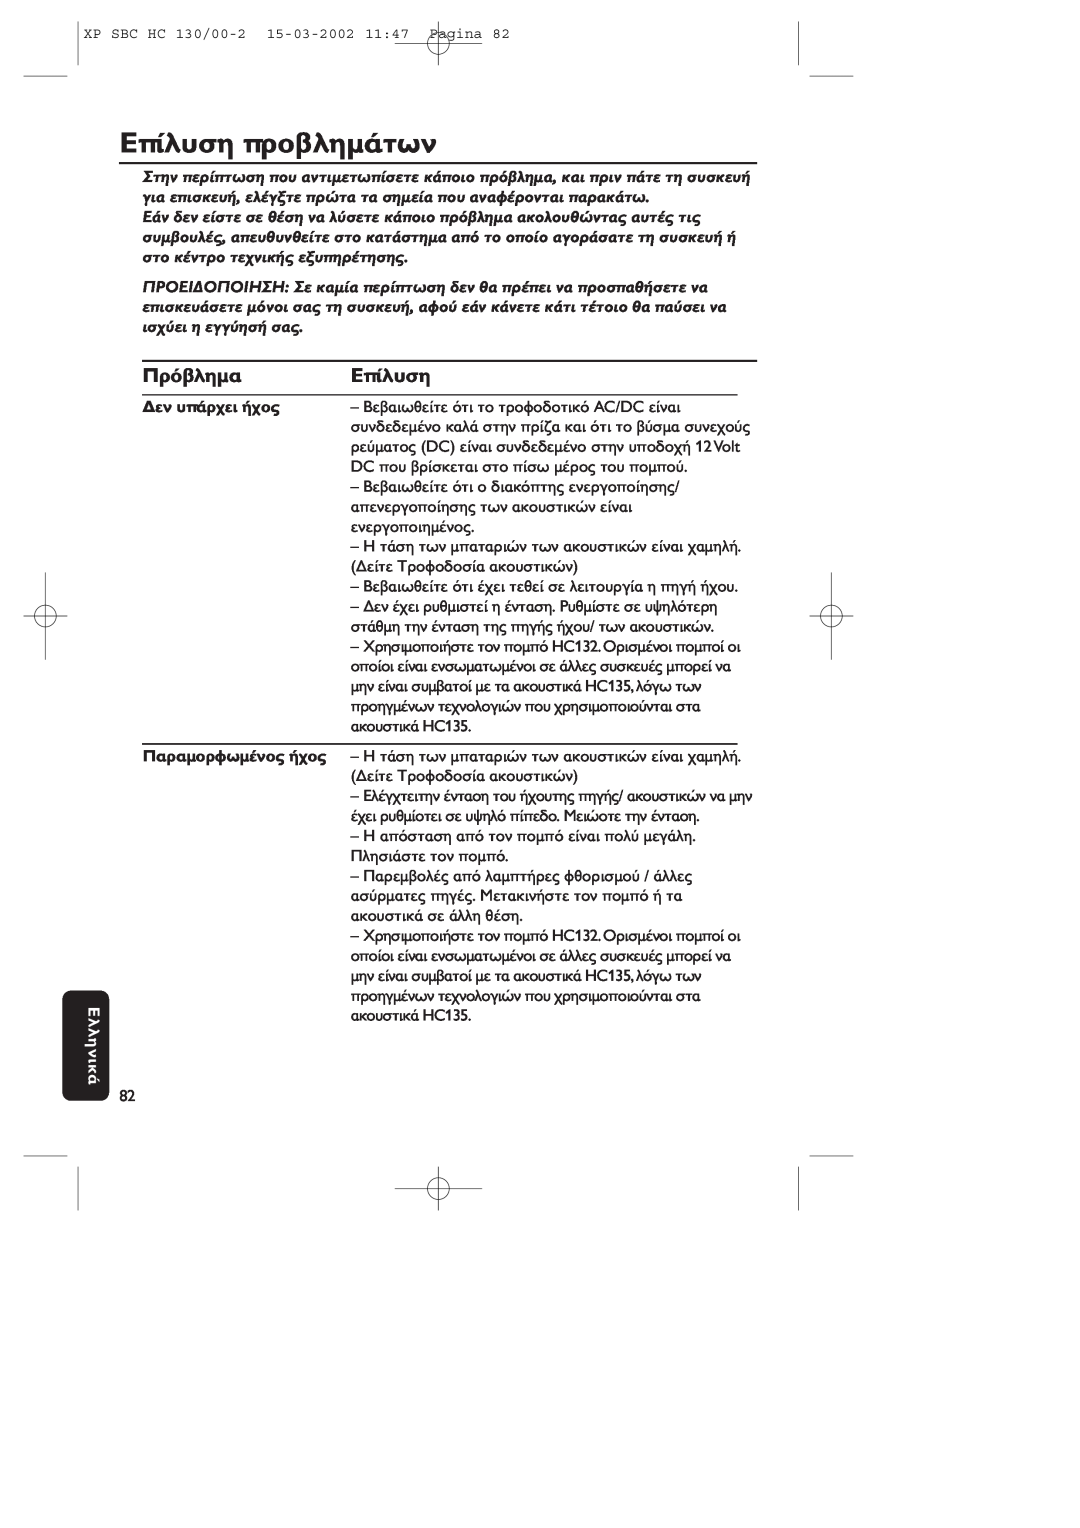 Philips SBC HC130 manual 